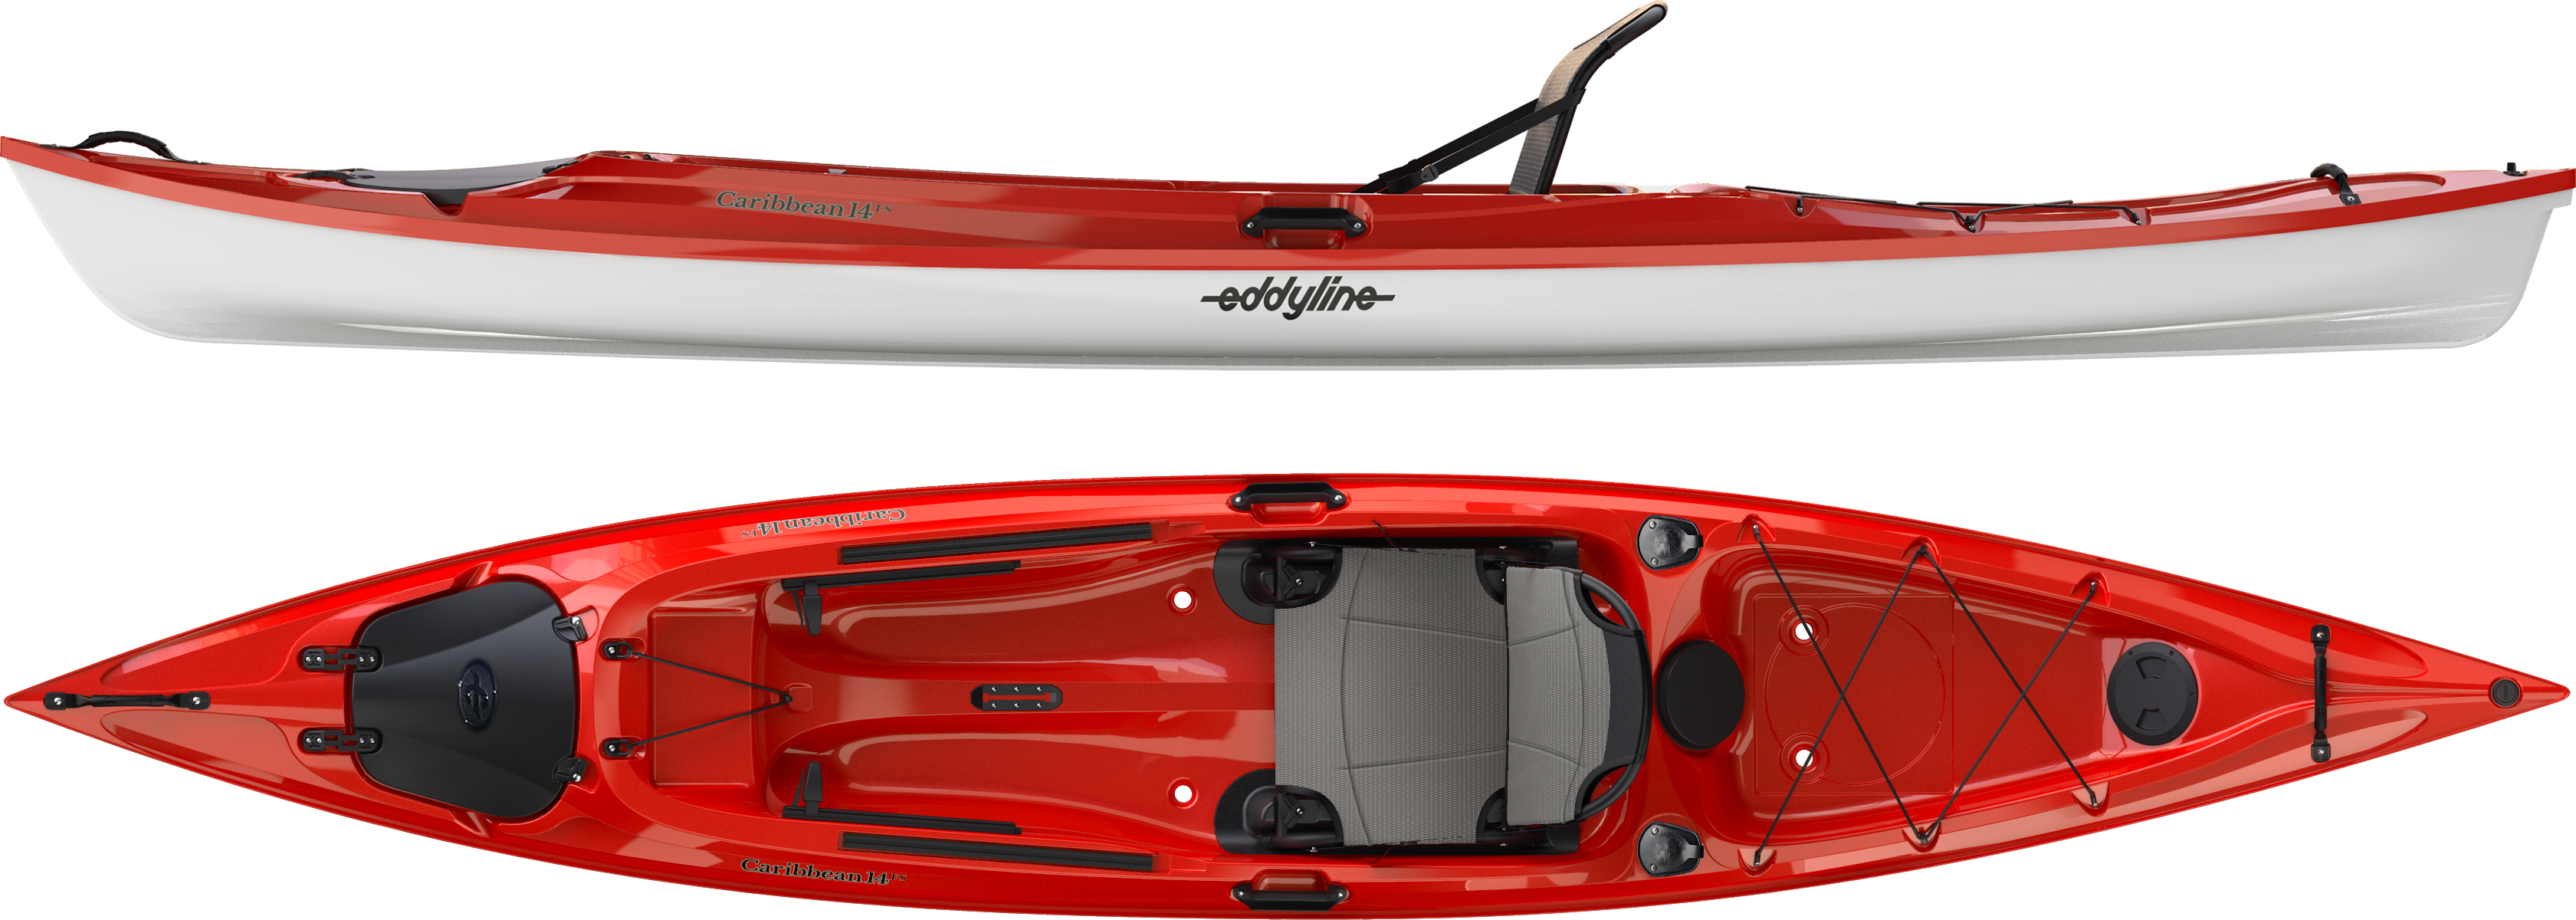 Kayaks - Pricing, Reviews, Photos & Full Specs [Paddling Buyer's